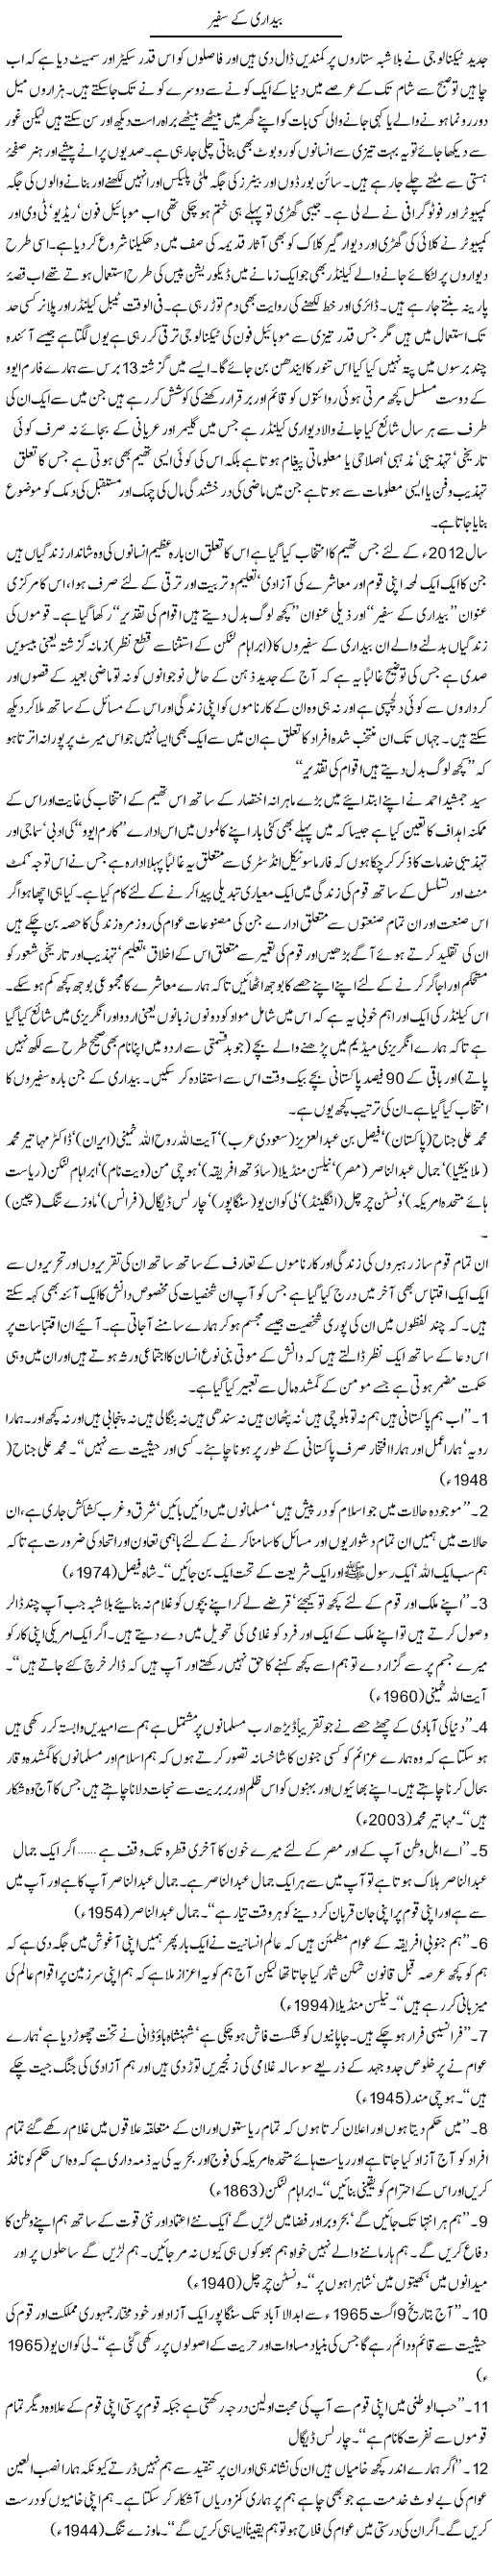 Sayings of Big Personalities Express Column Amjad Islam 8 January 2012